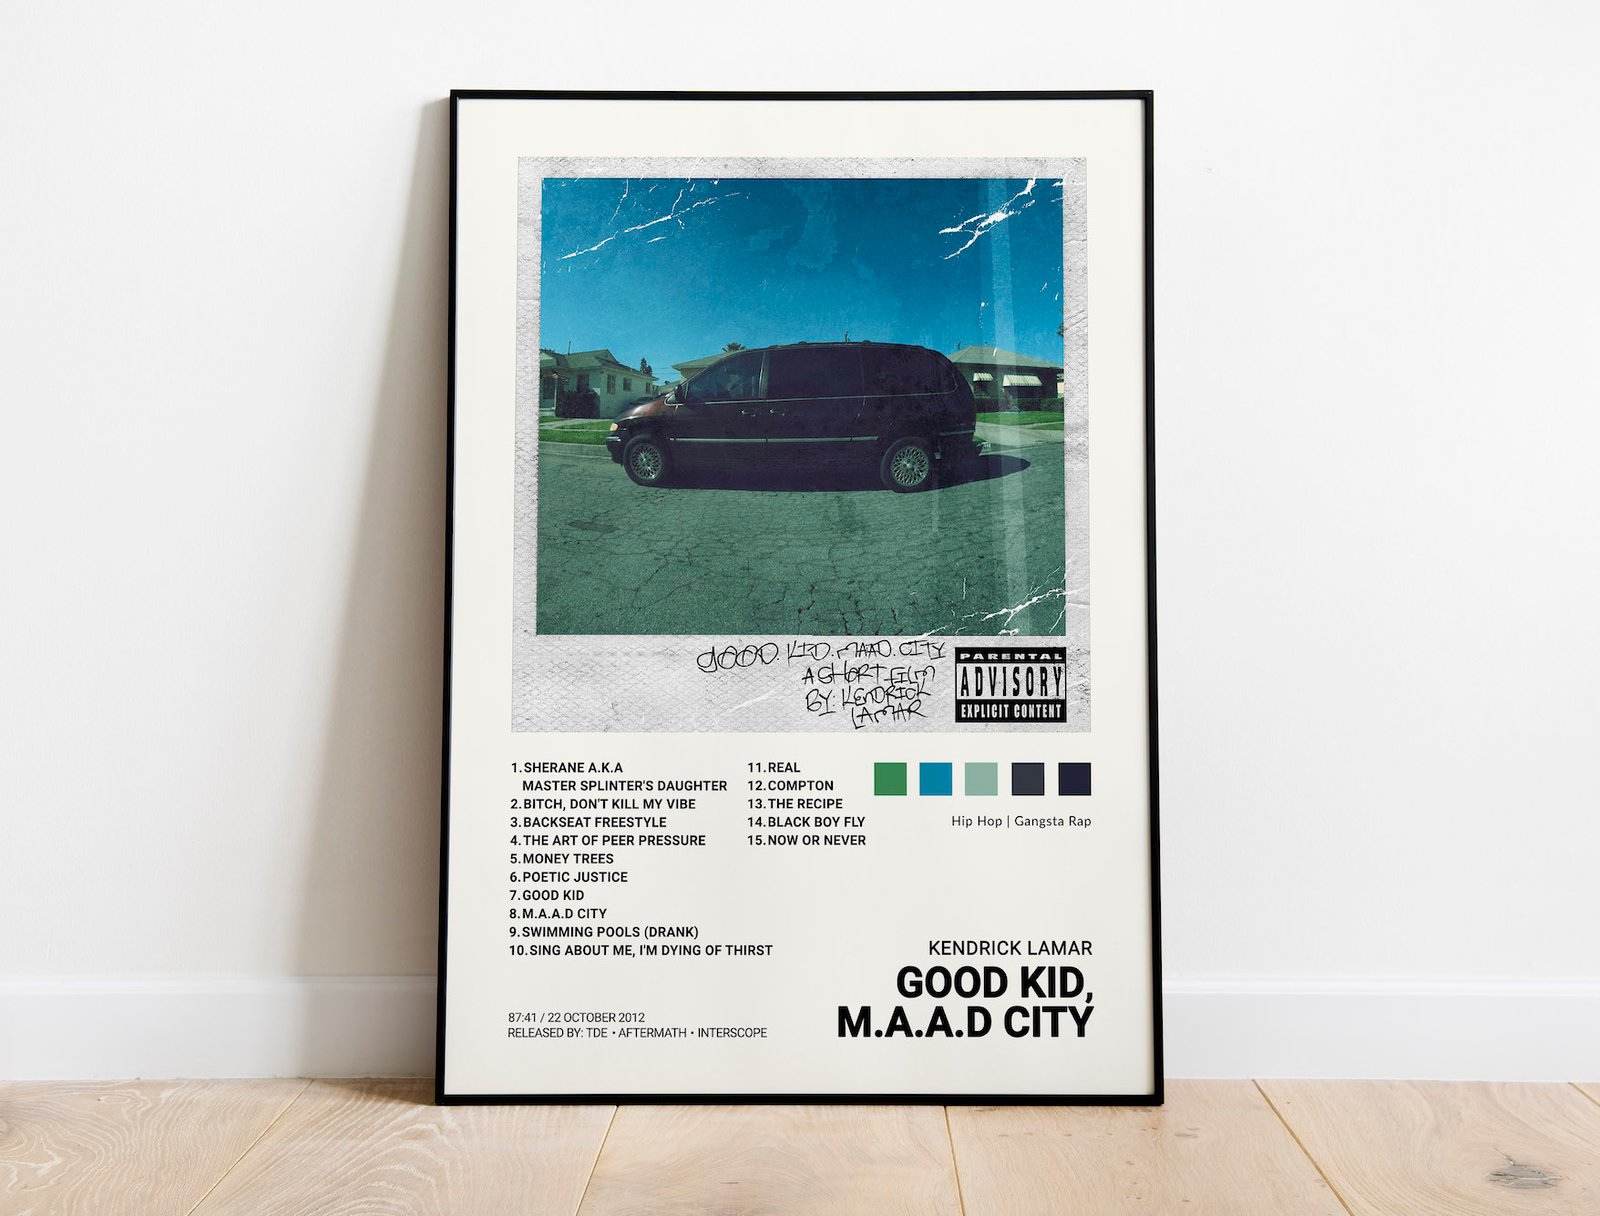 inches Kendrick Lamar Good Kid Maad City Album Cover Poster 24x36 